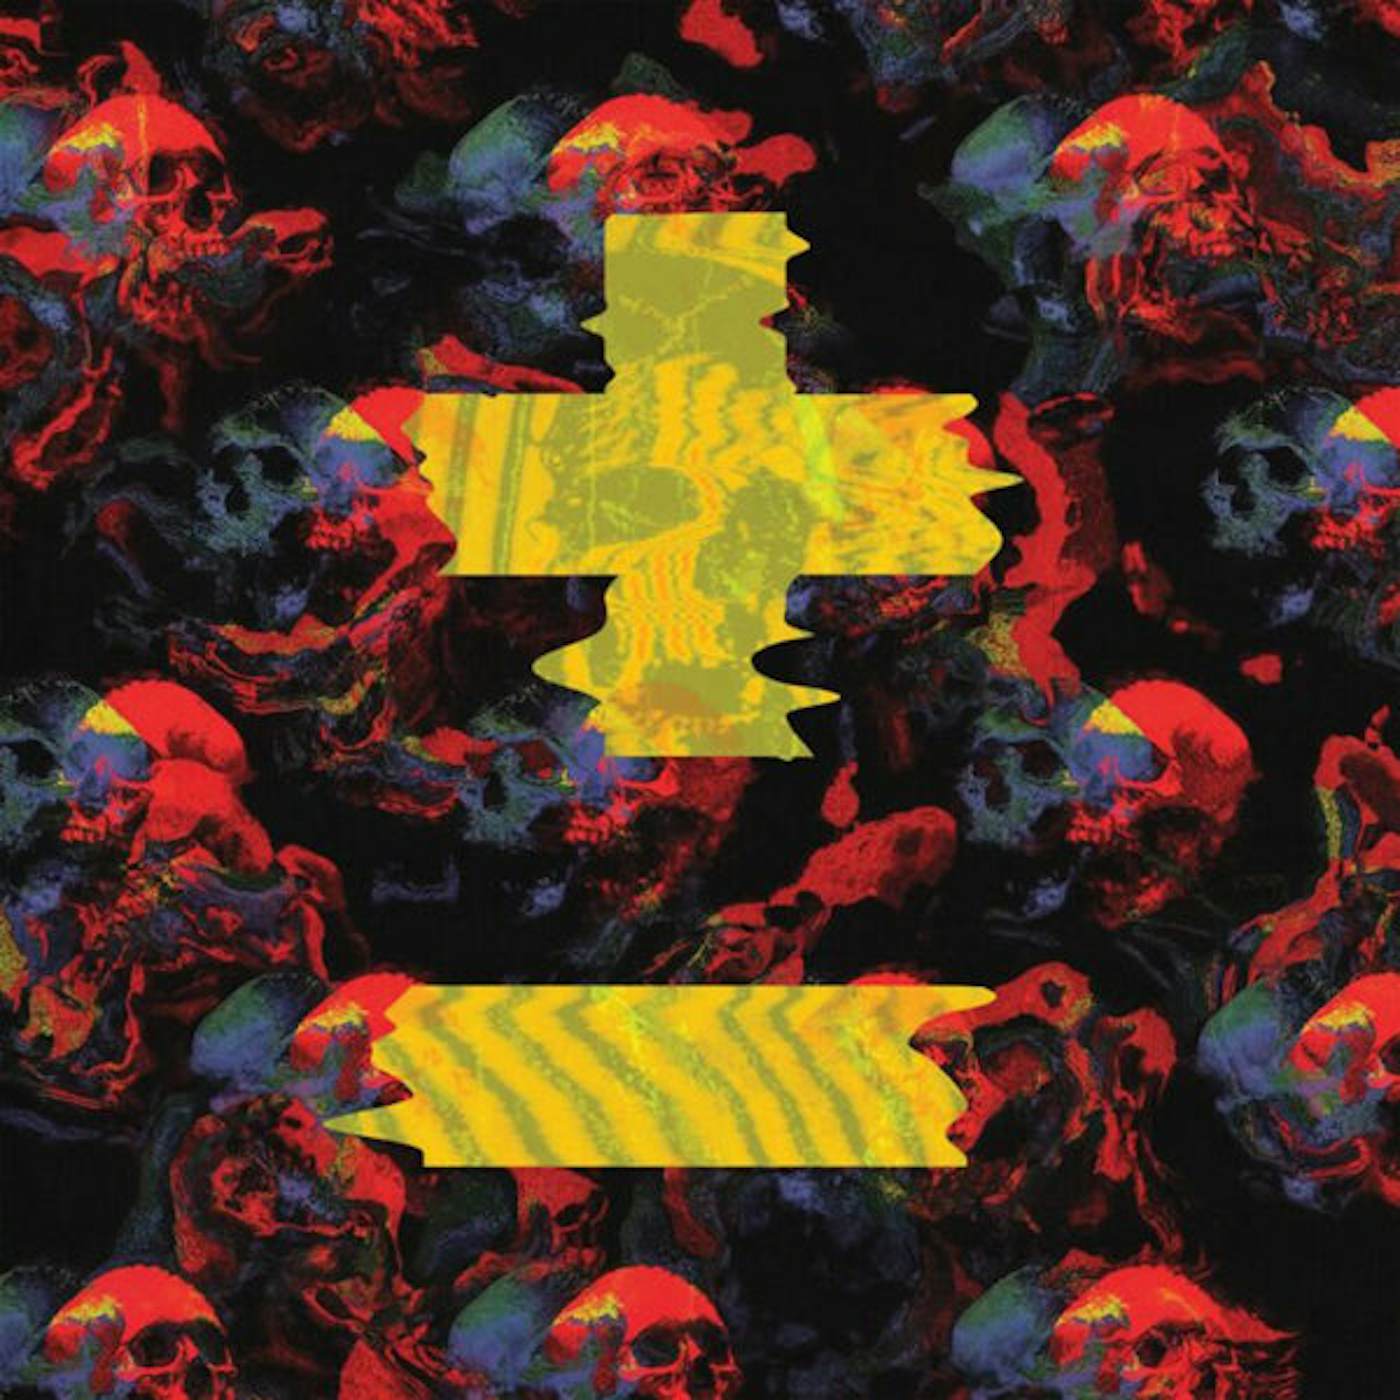 Pop Evil LP - Skeletons (Opaque Turquoise) (Vinyl)